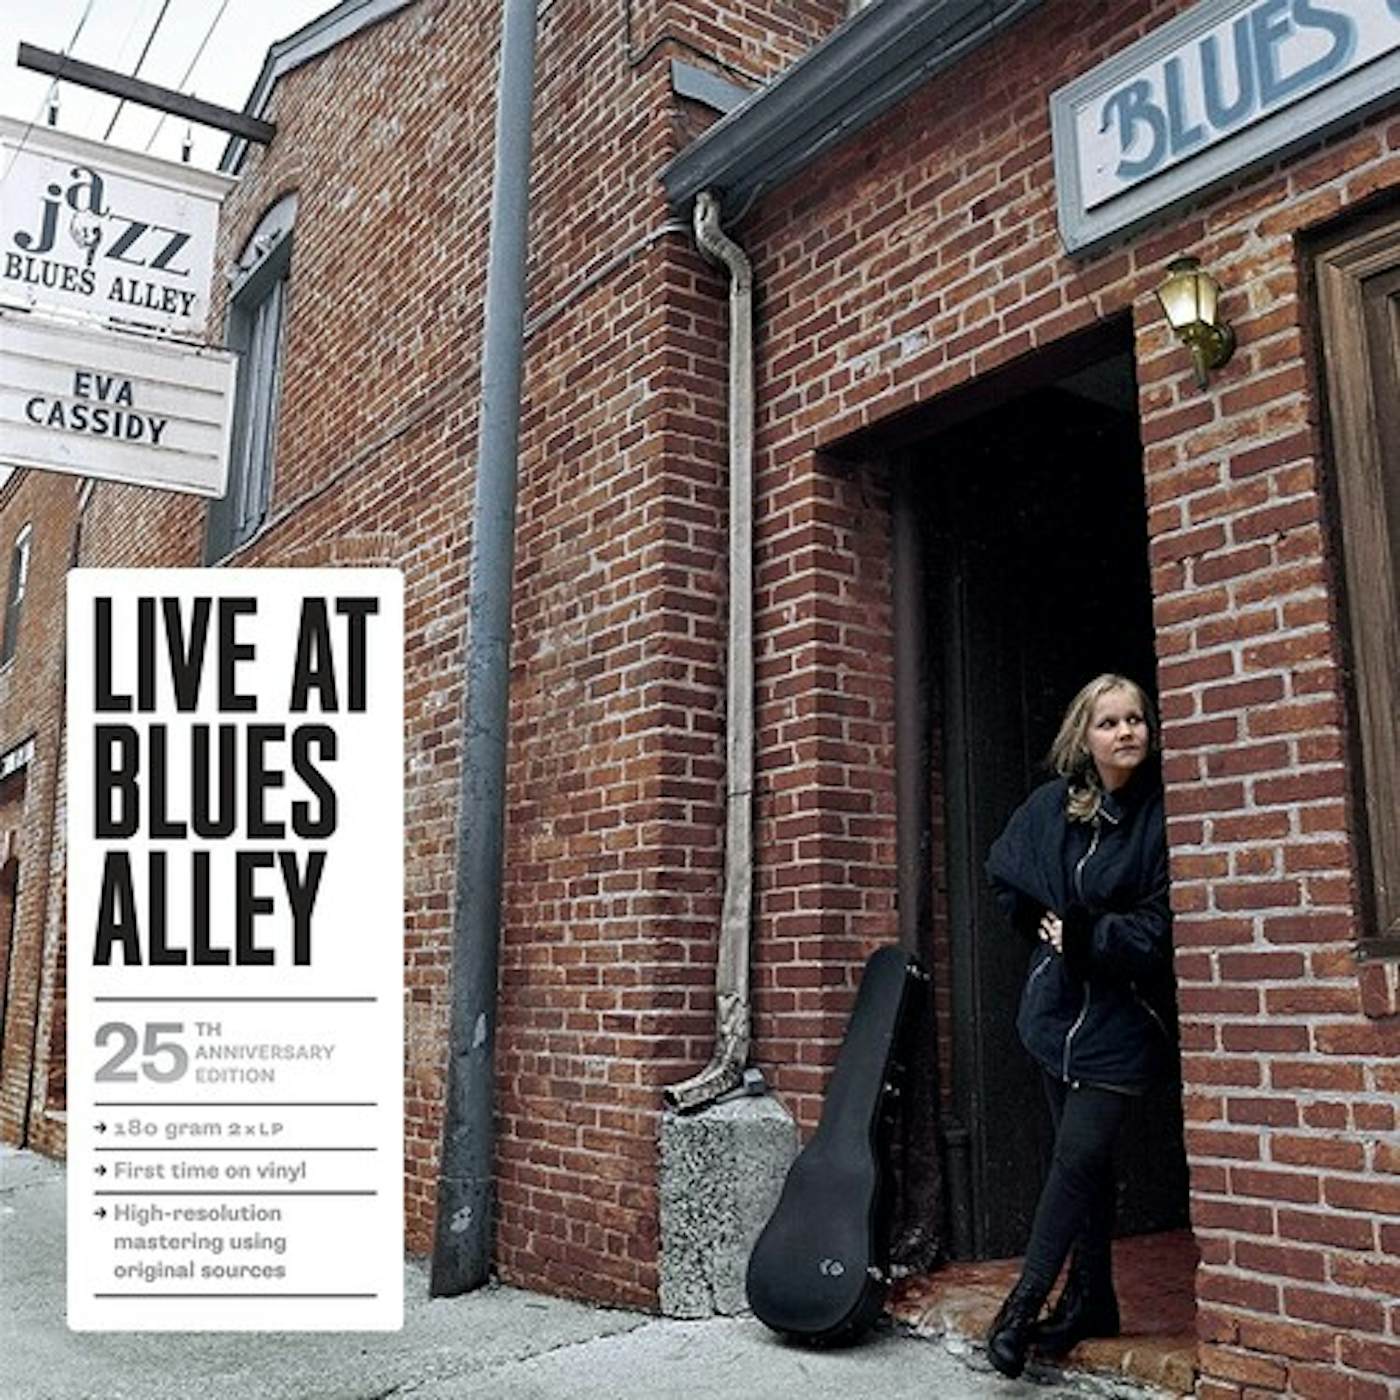 Eva Cassidy Live At Blues Alley (25th Anniversary Edition) Vinyl Record